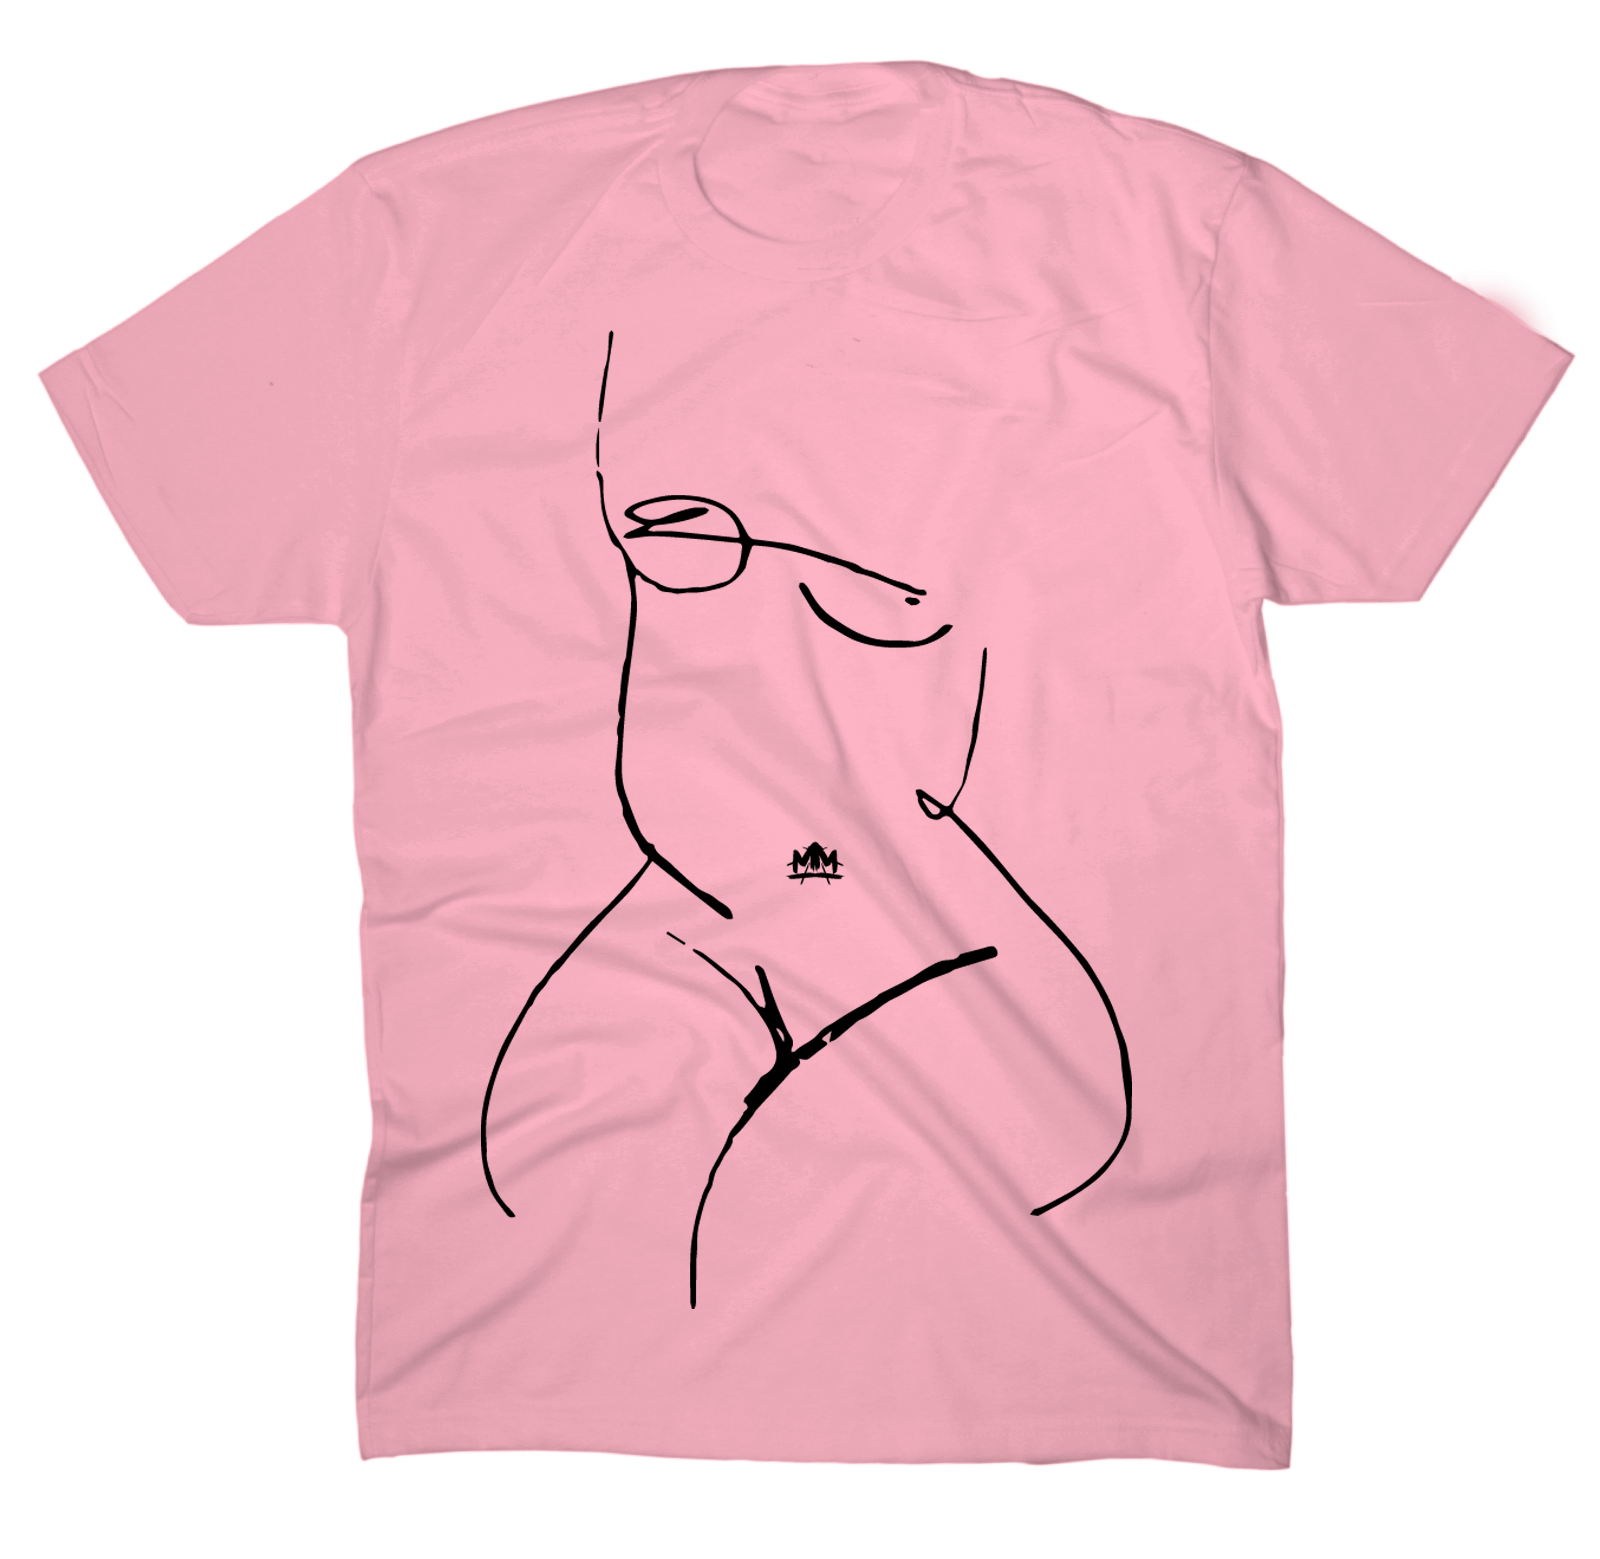 Send Nudes T-Shirt [Light Pink] - Signedbymcfly